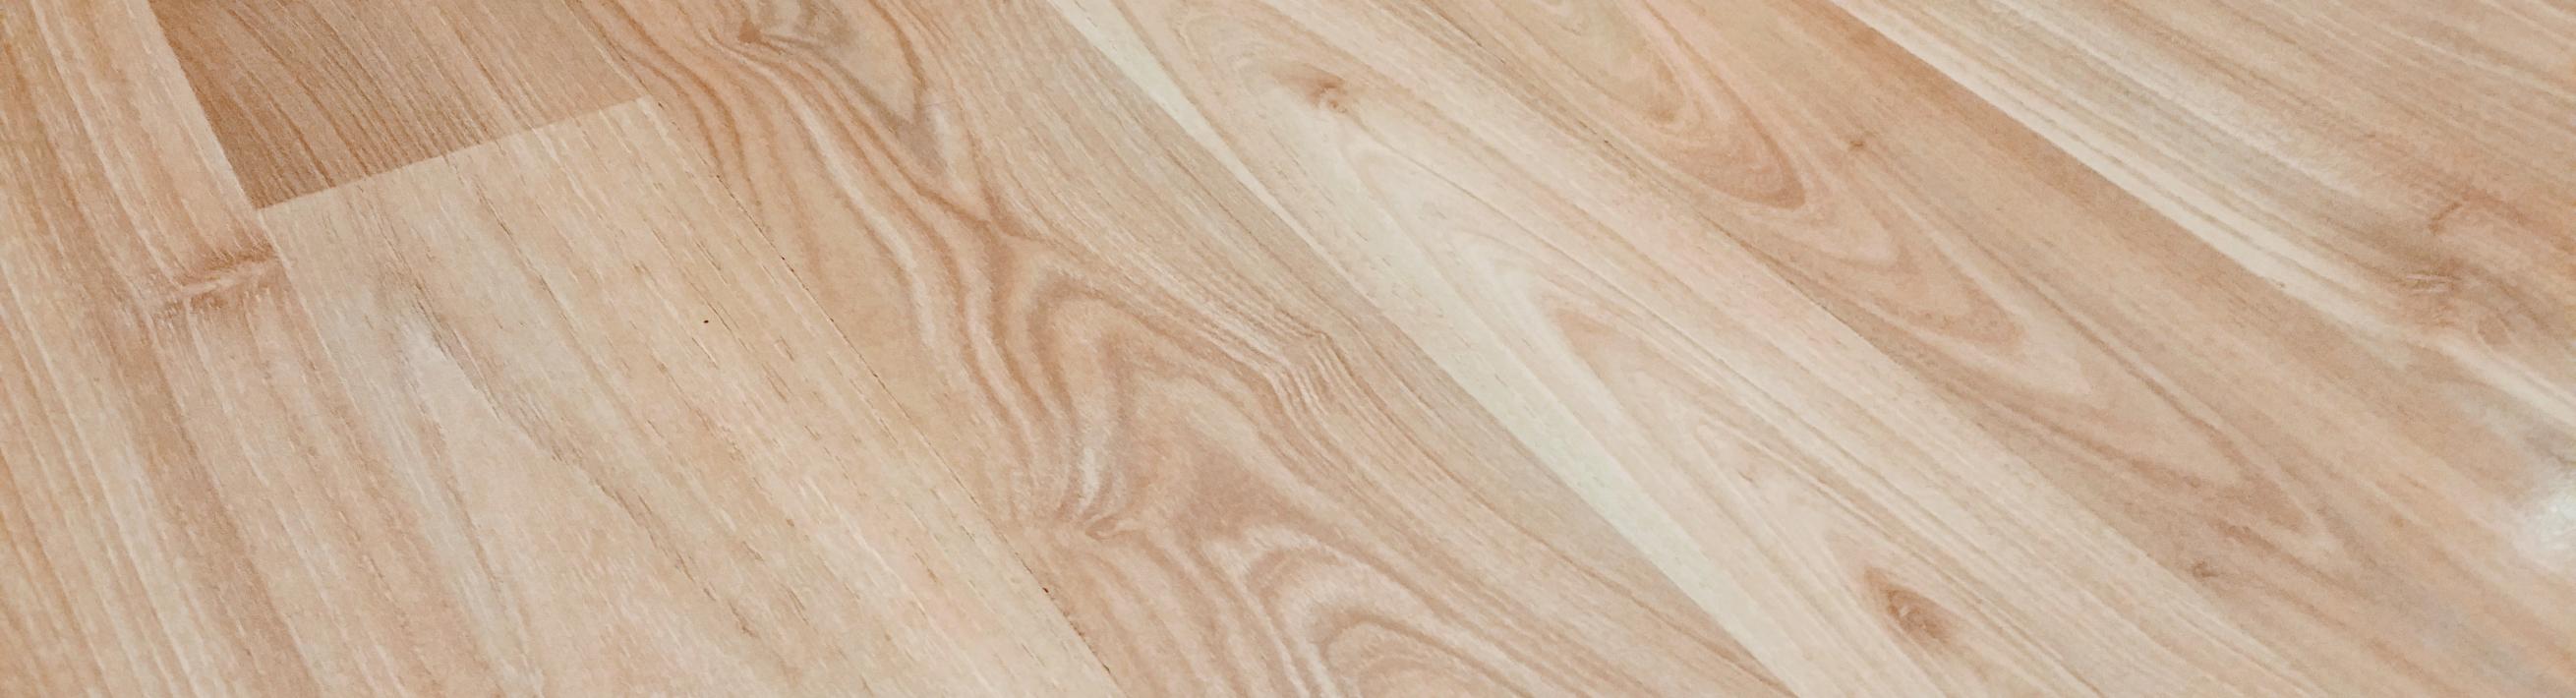 Resilient flooring made to look like hardwood